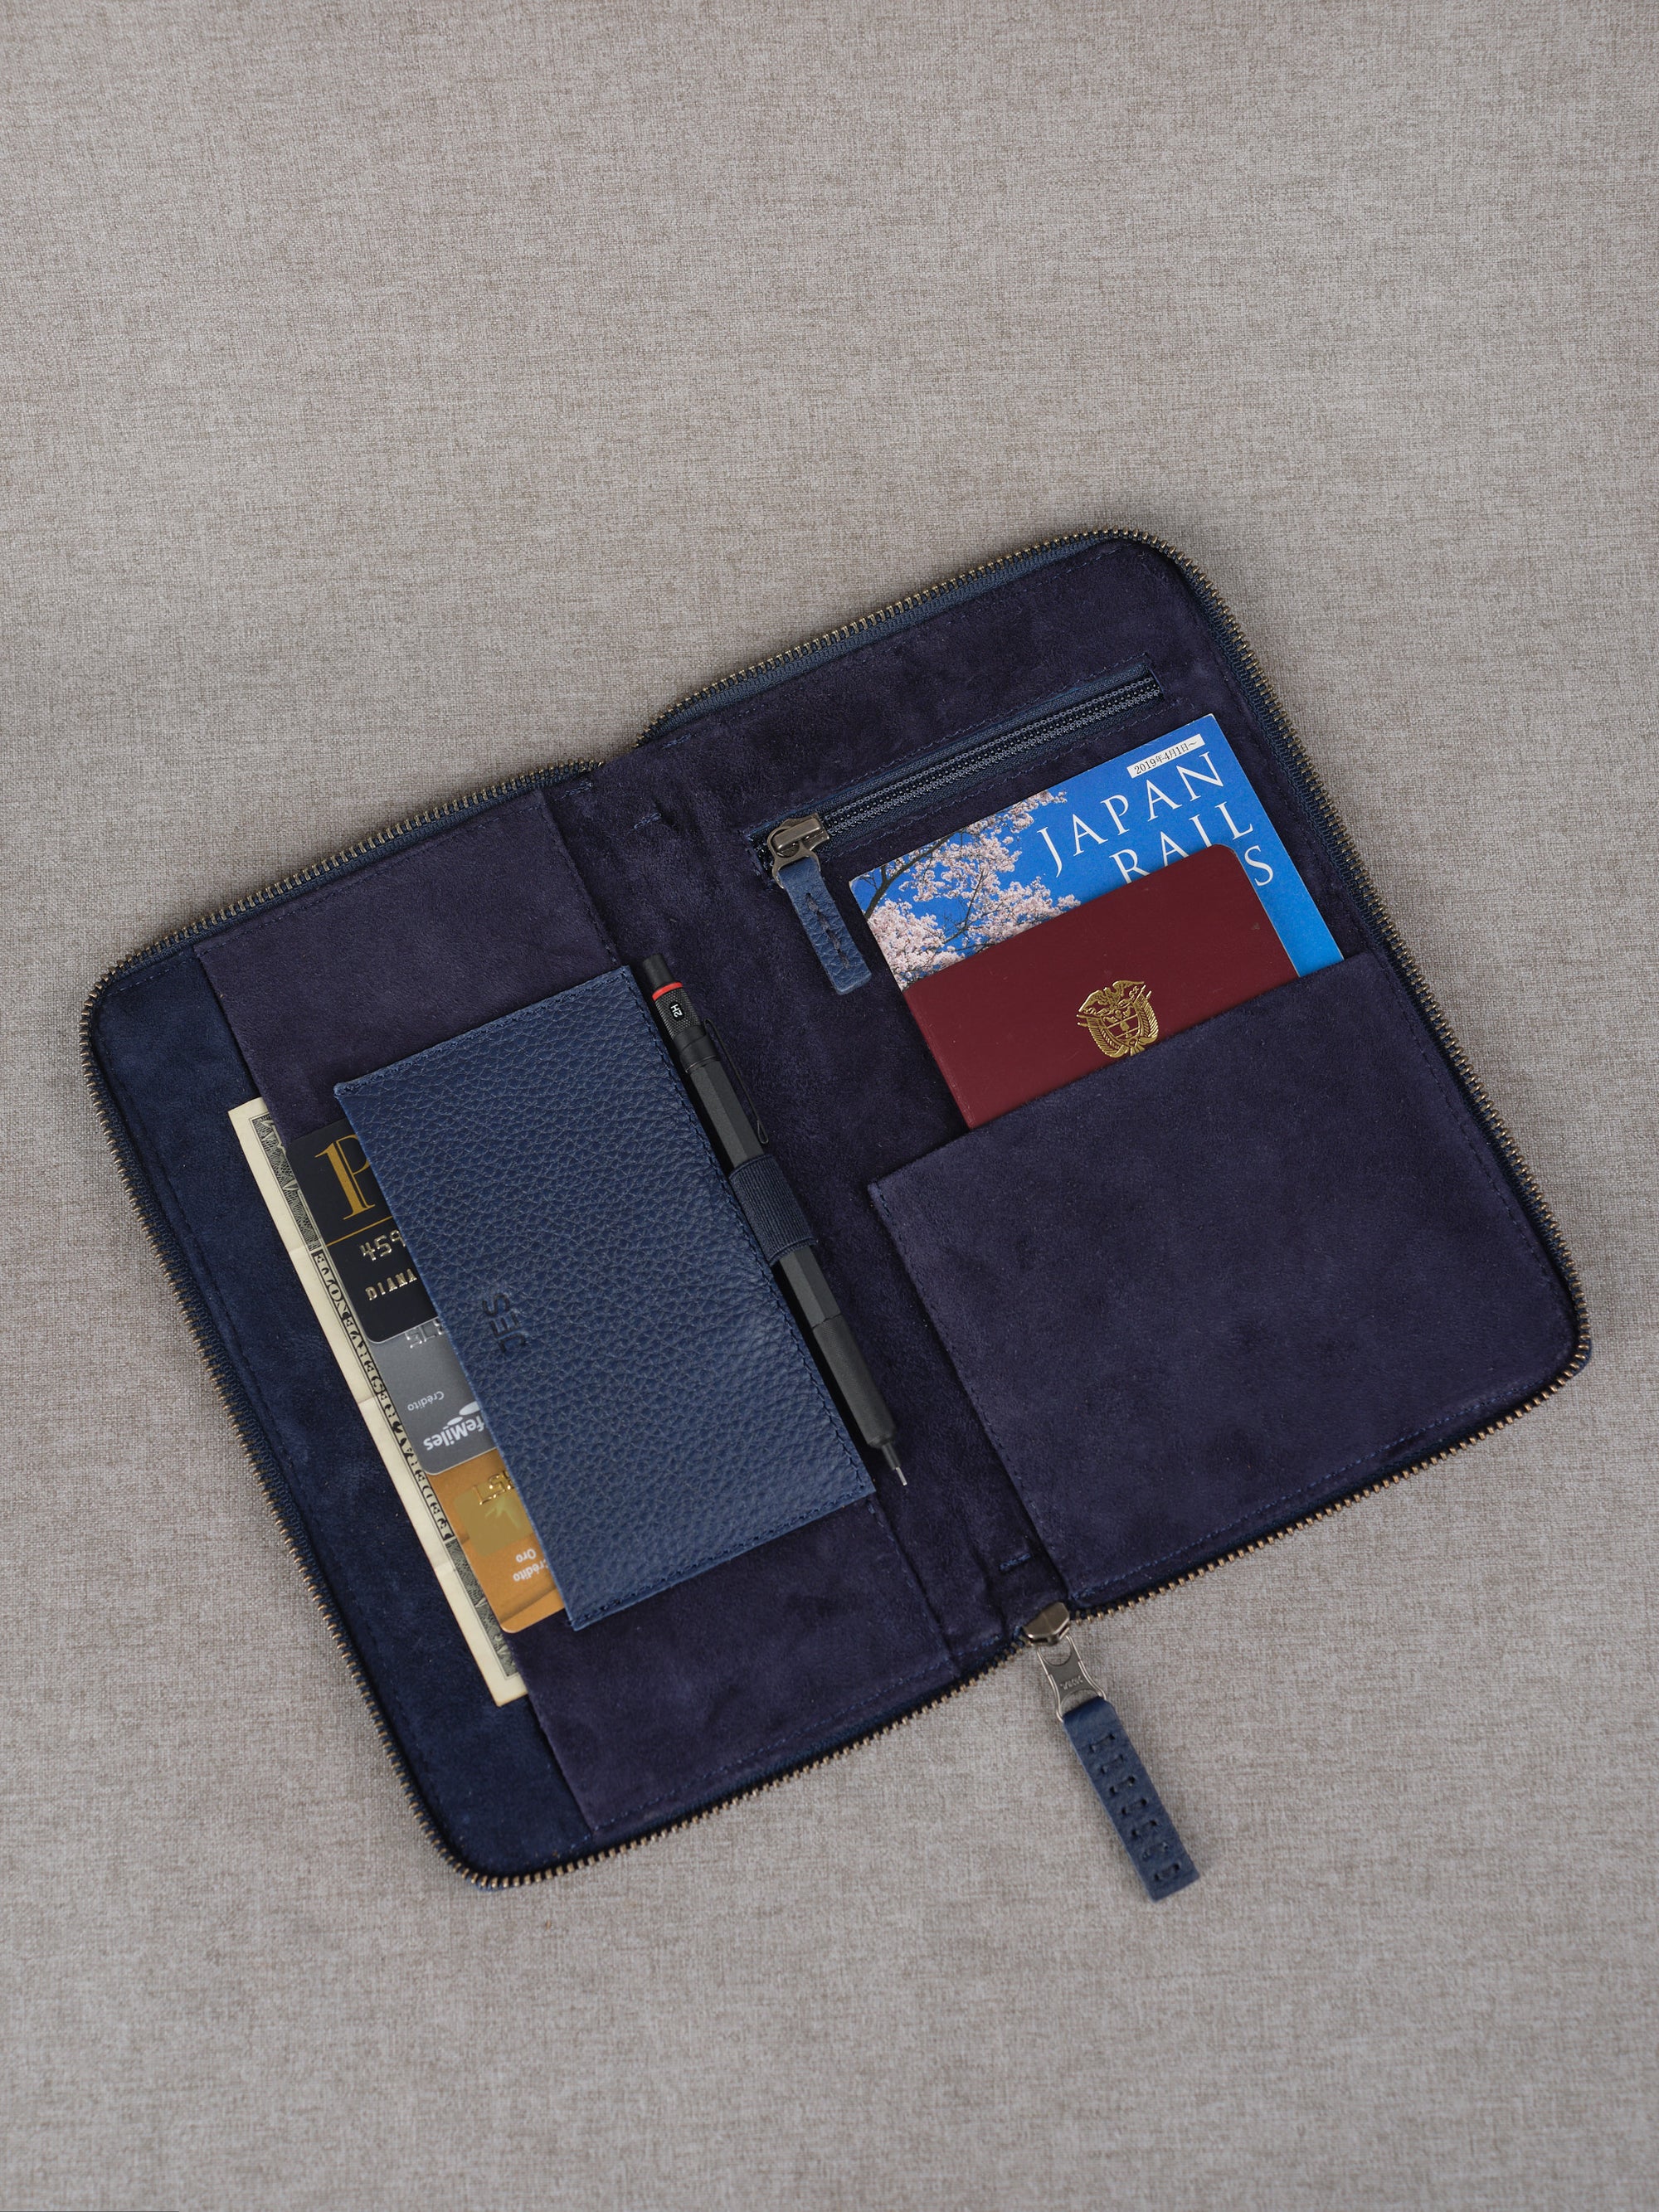 Passport holder navy blue by Capra Leather